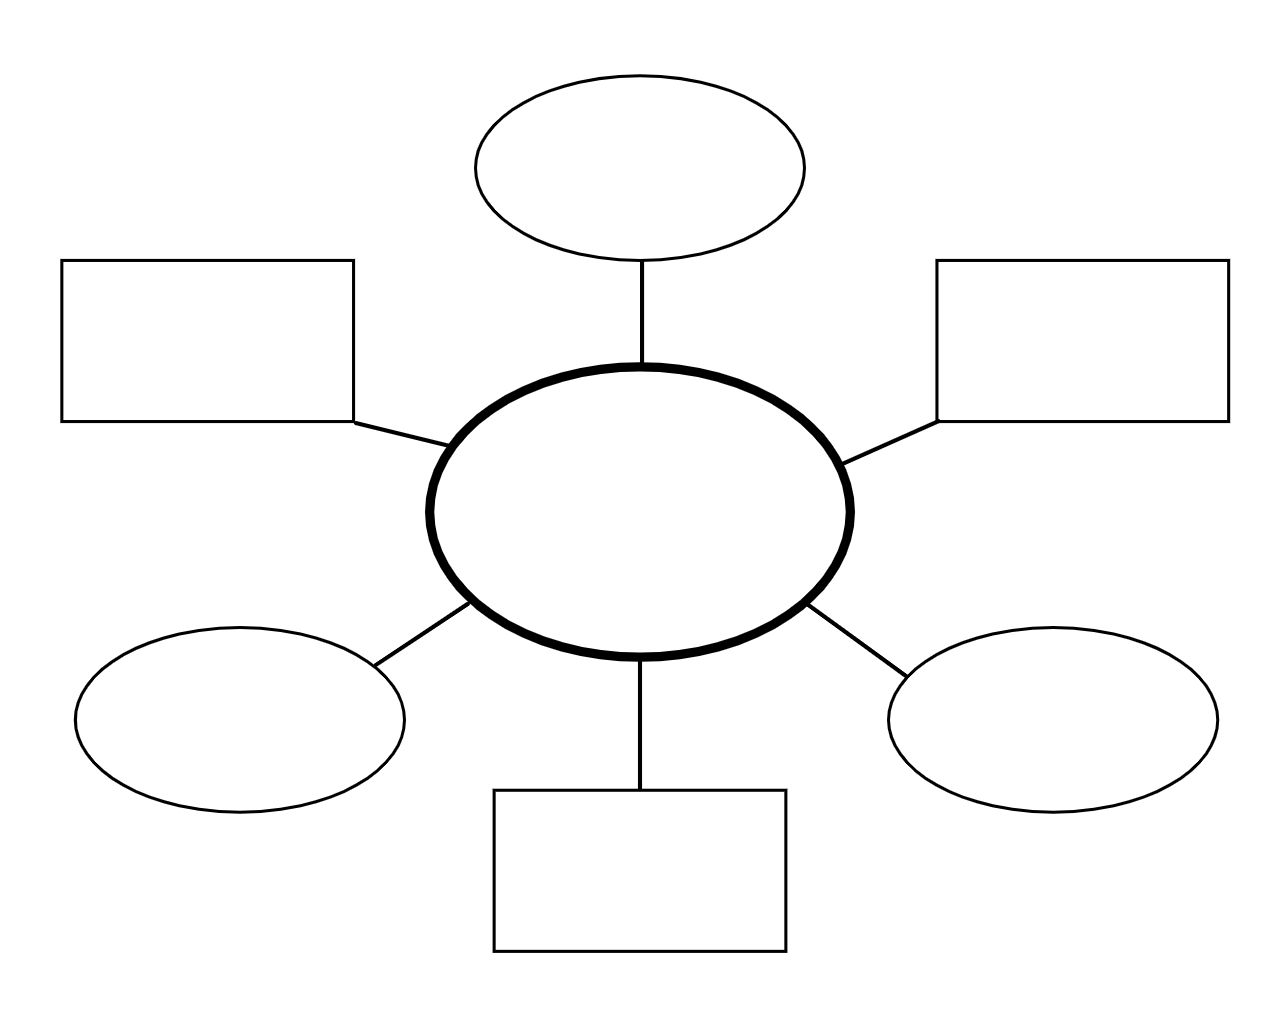 An example Brainstorm Chart template. 